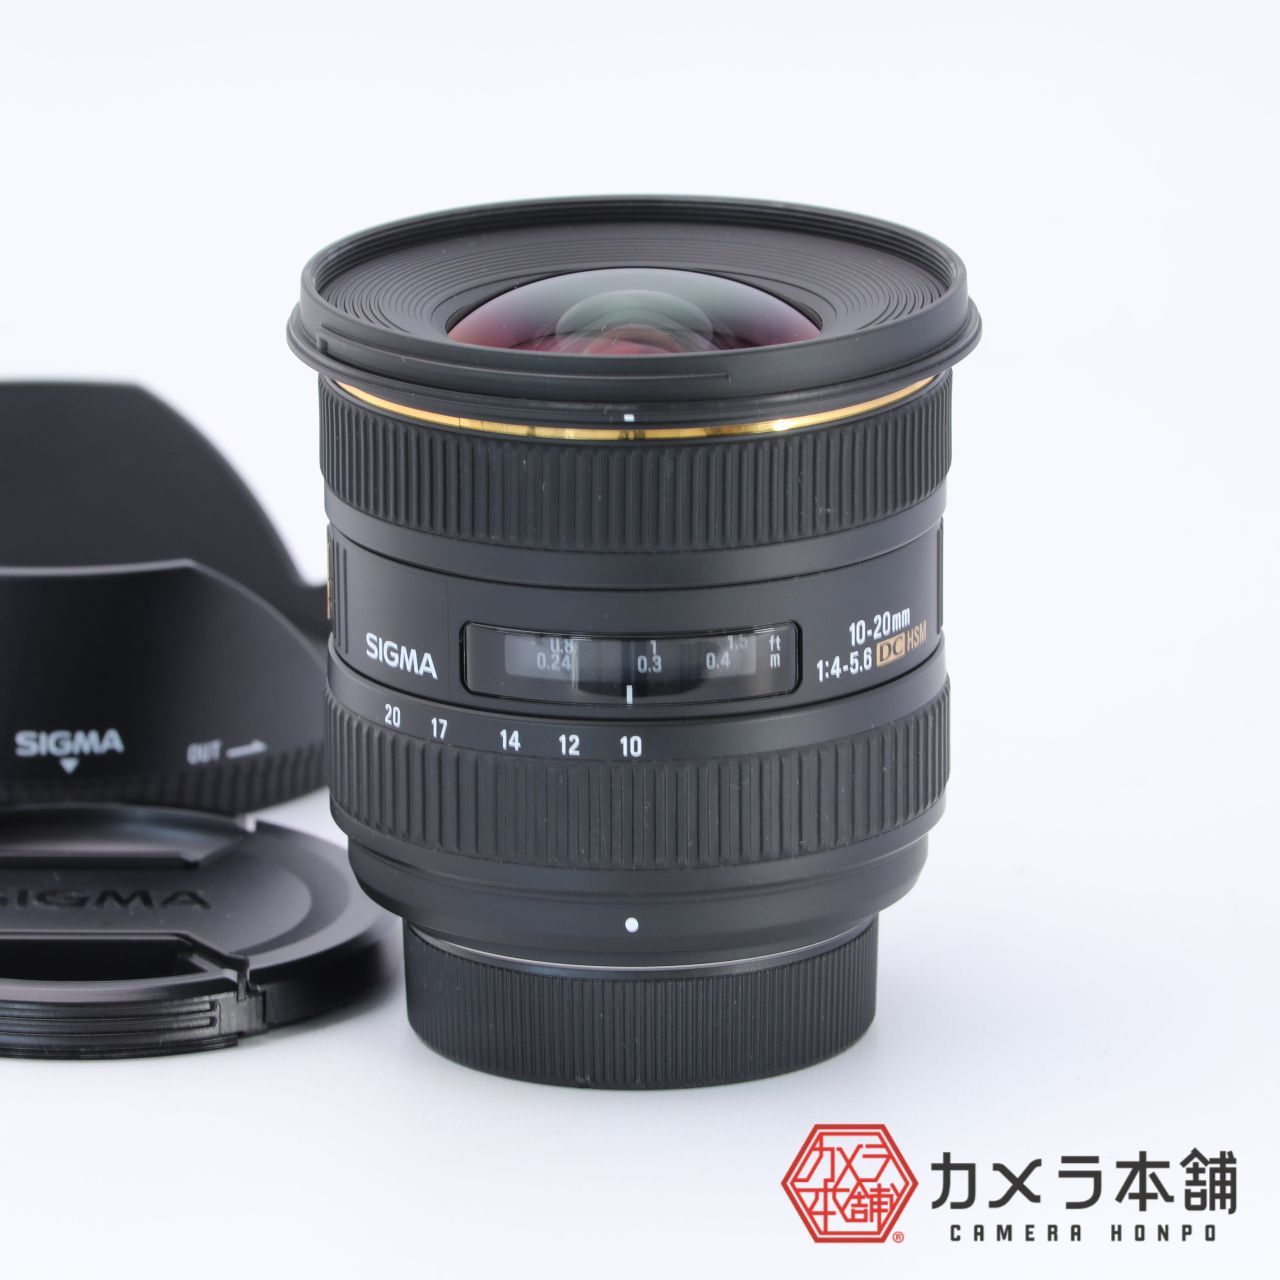 SIGMA シグマ 10-20mm F4-5.6 EX DC HSM ニコン用 - カメラ本舗